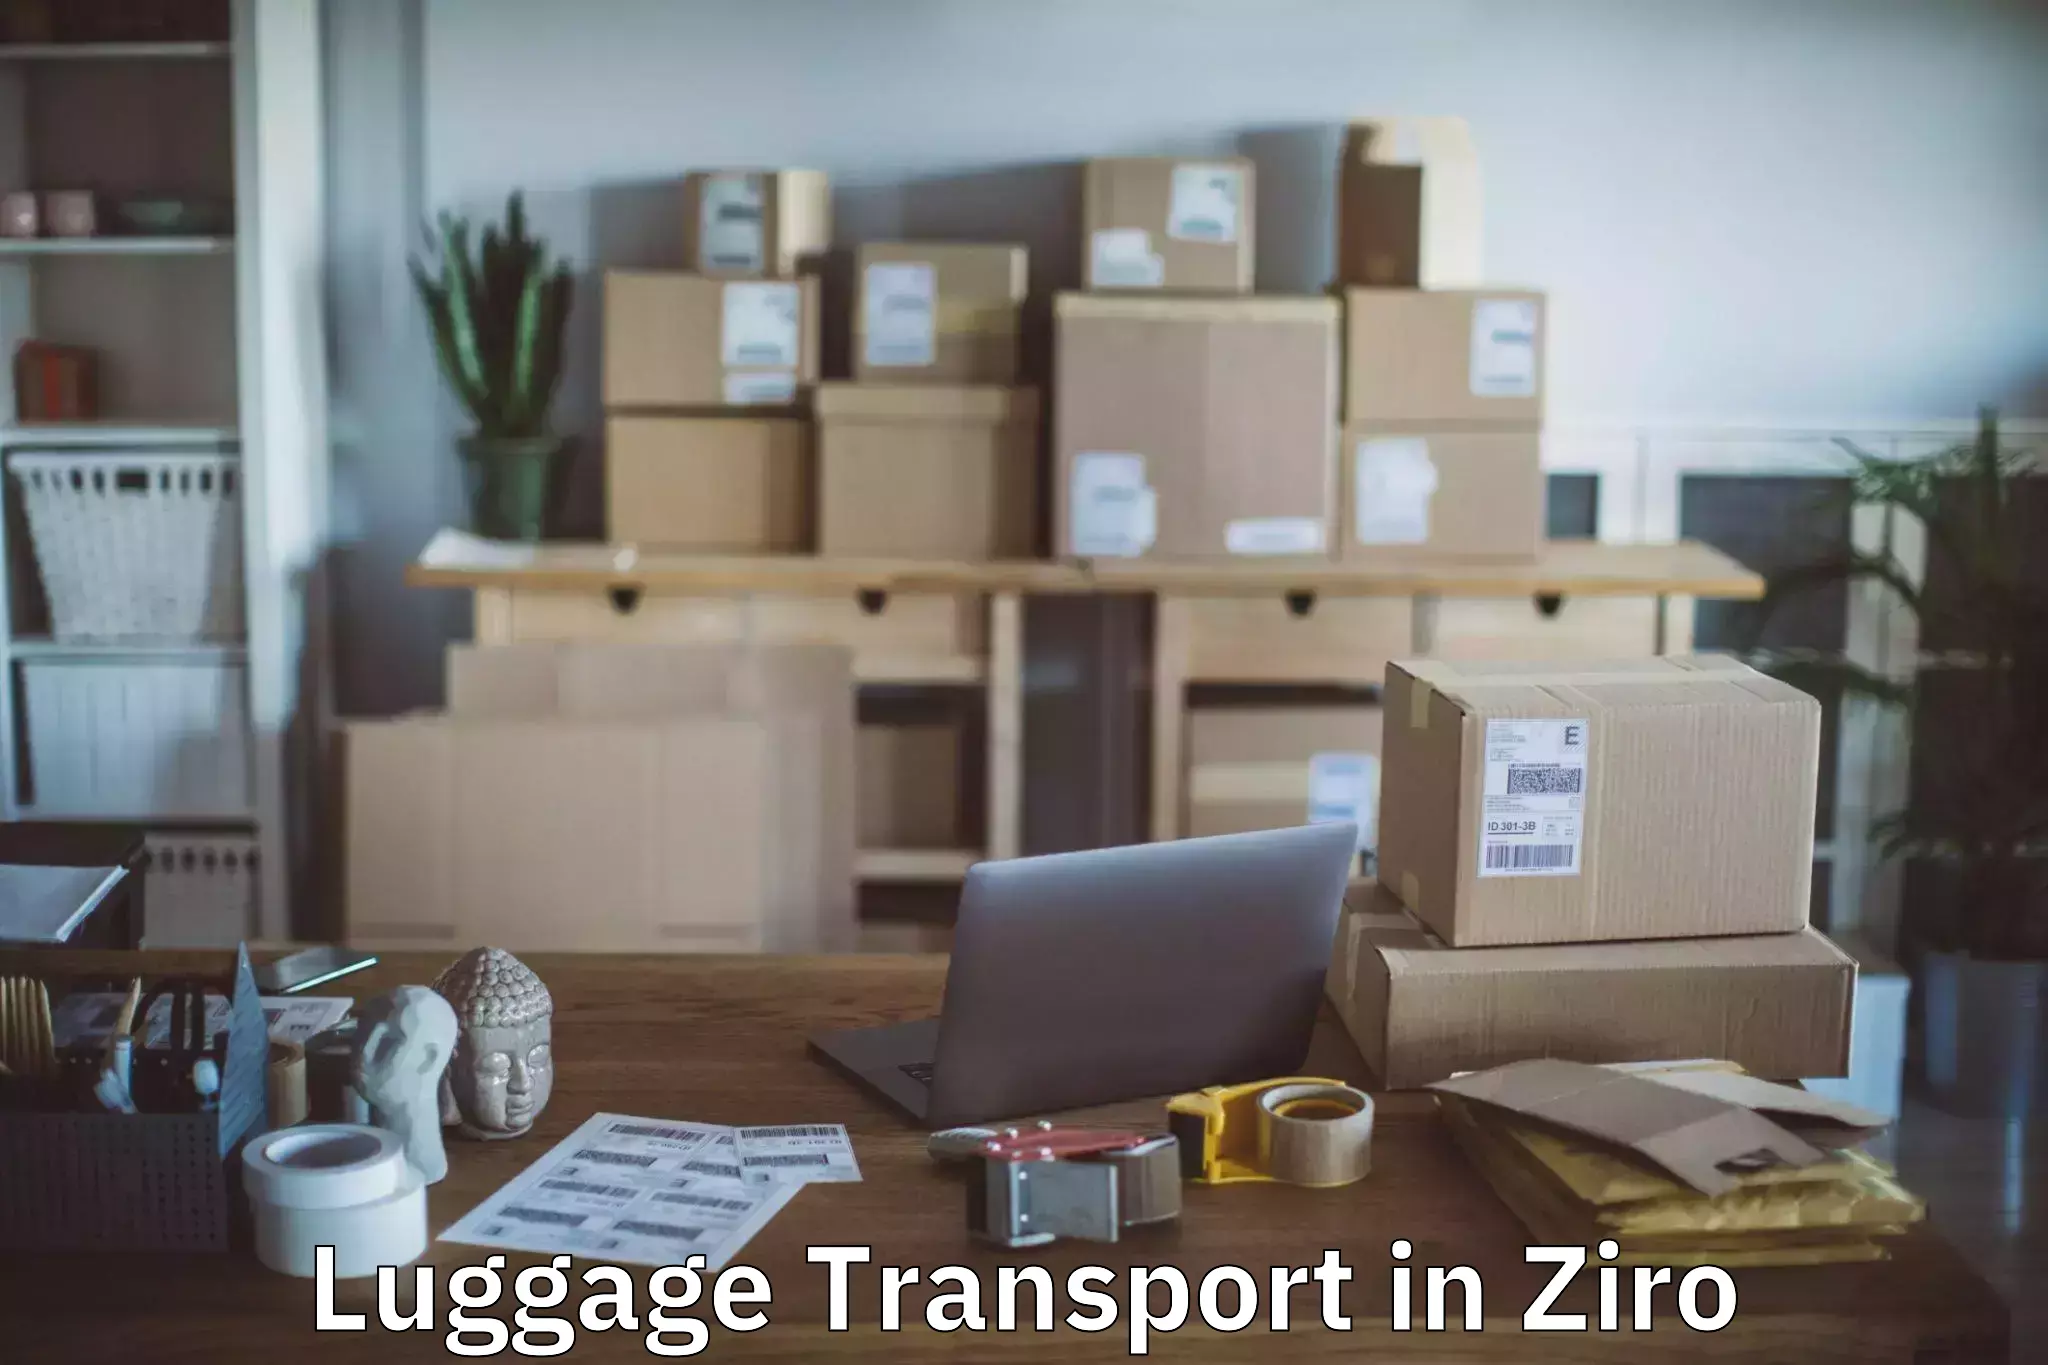 Luggage shipment processing in Ziro